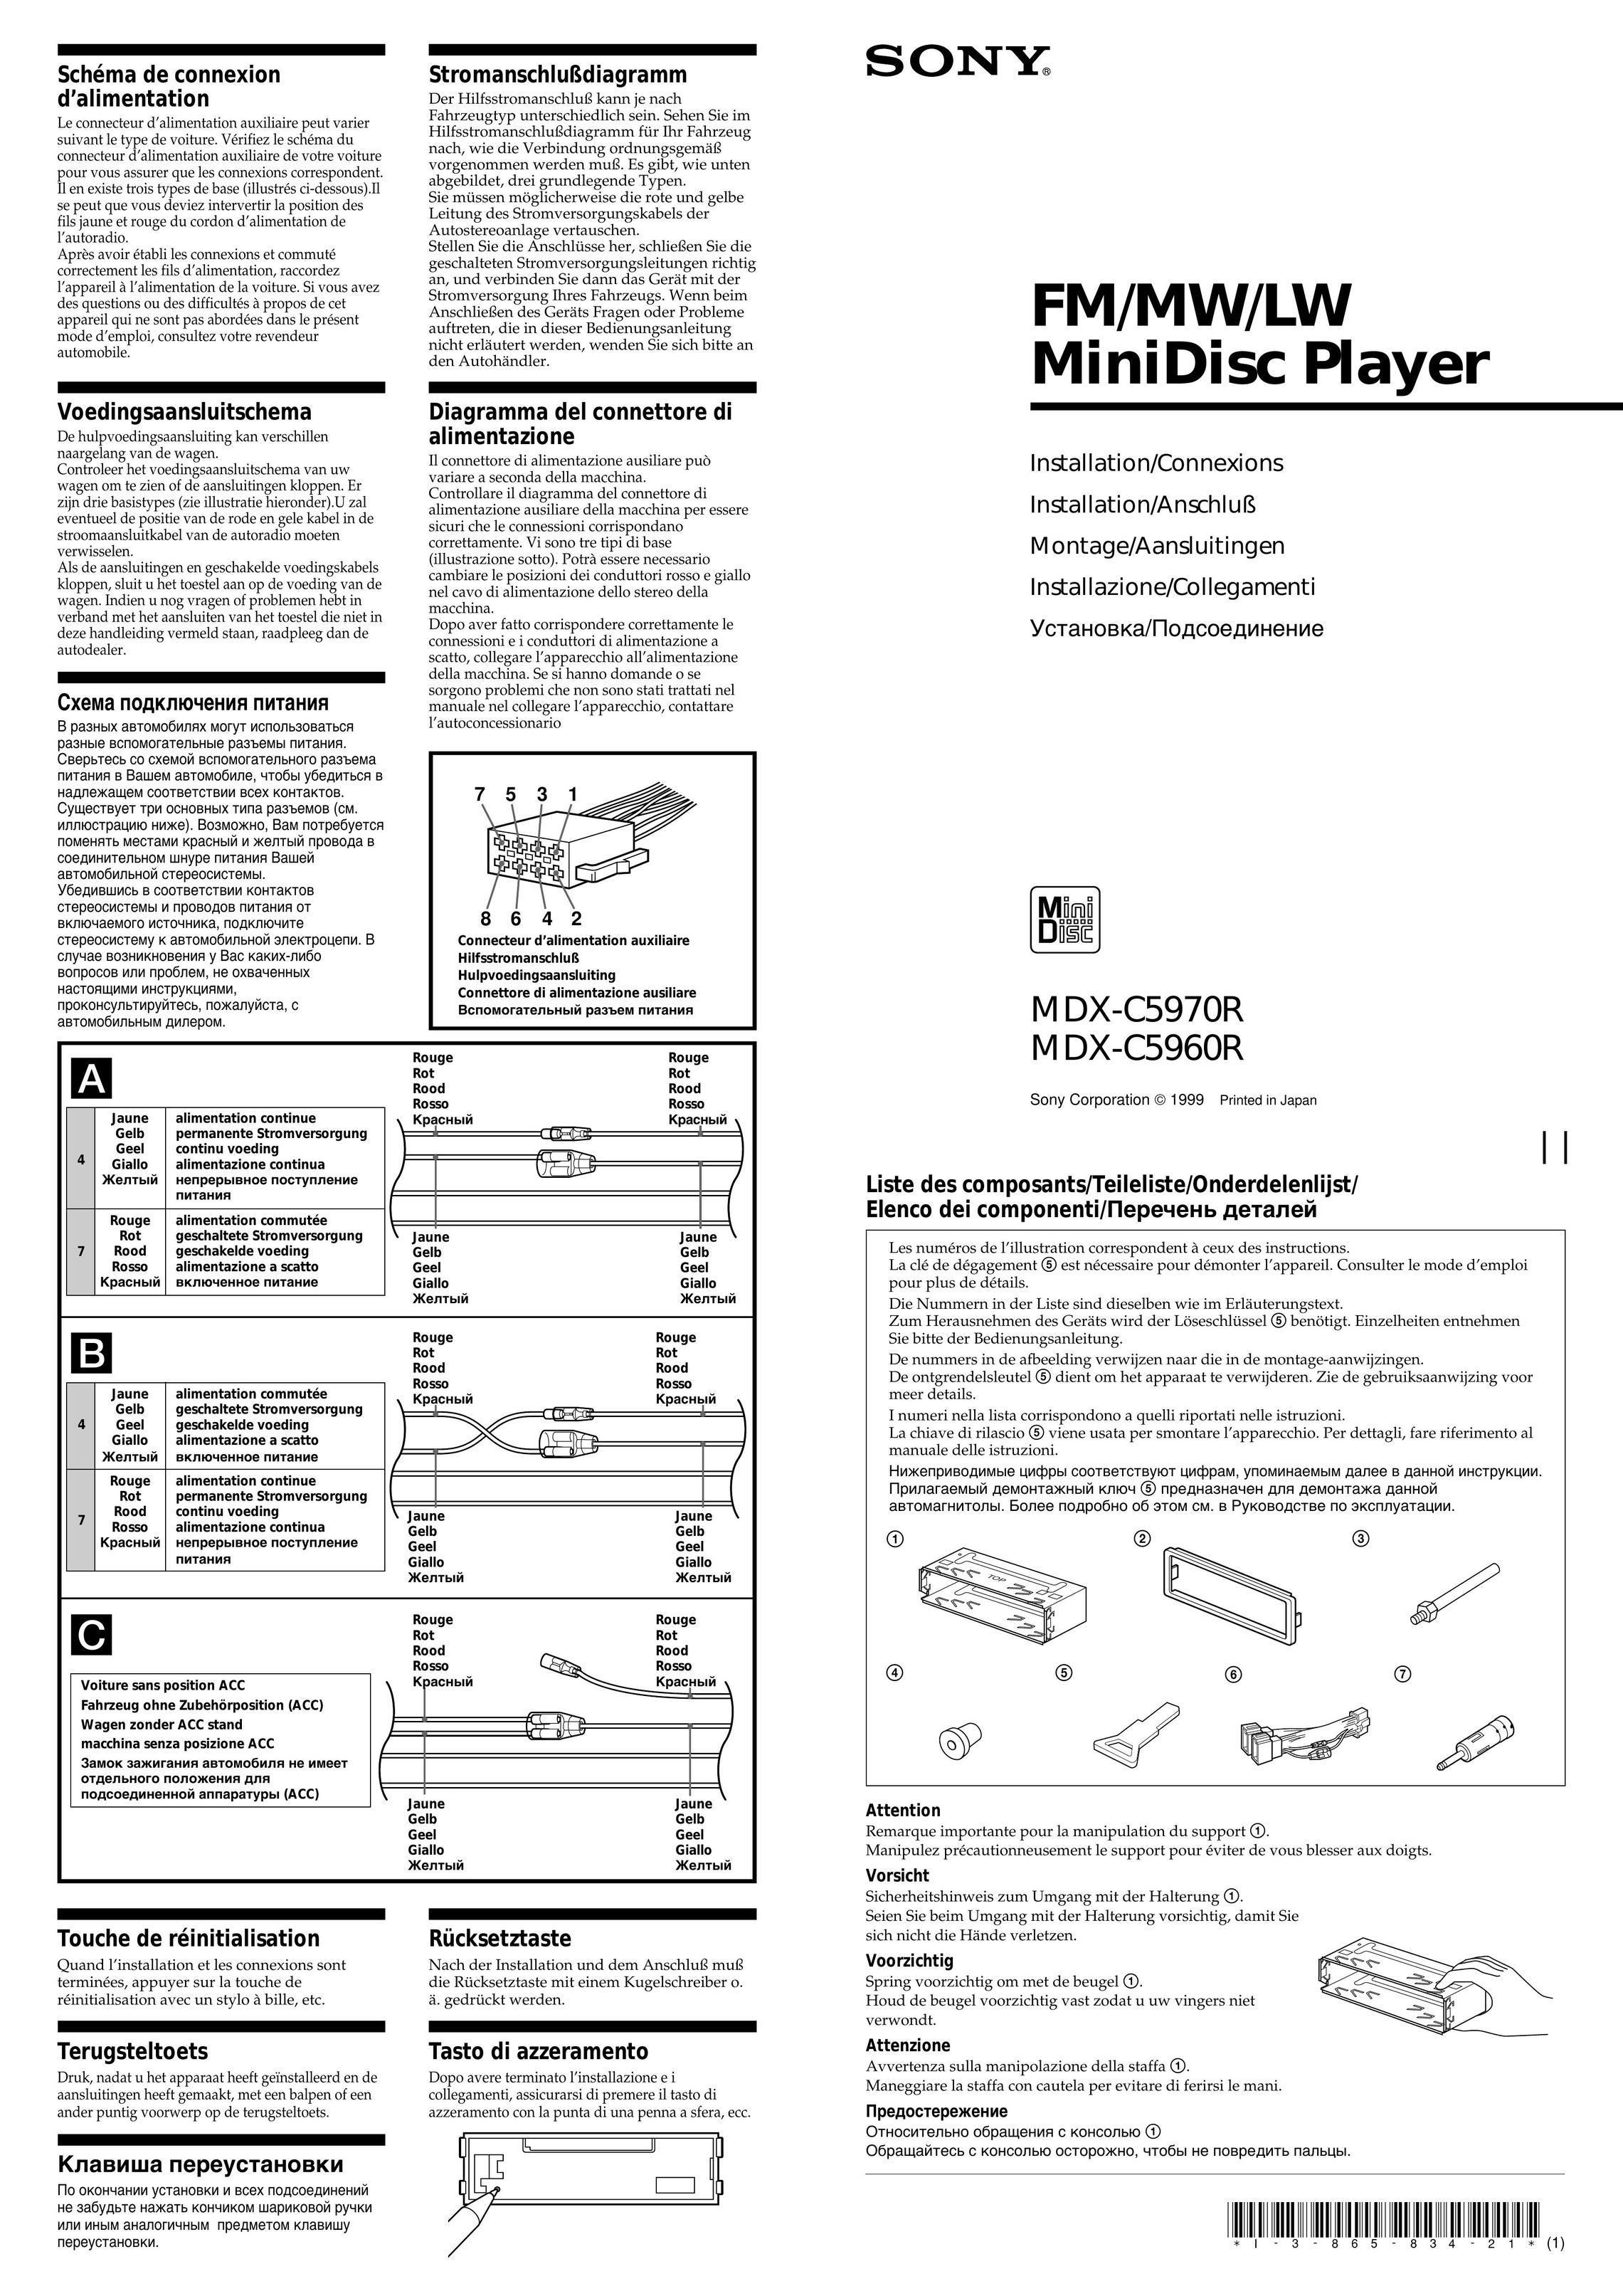 Sony MDX-C5960R MiniDisc Player User Manual